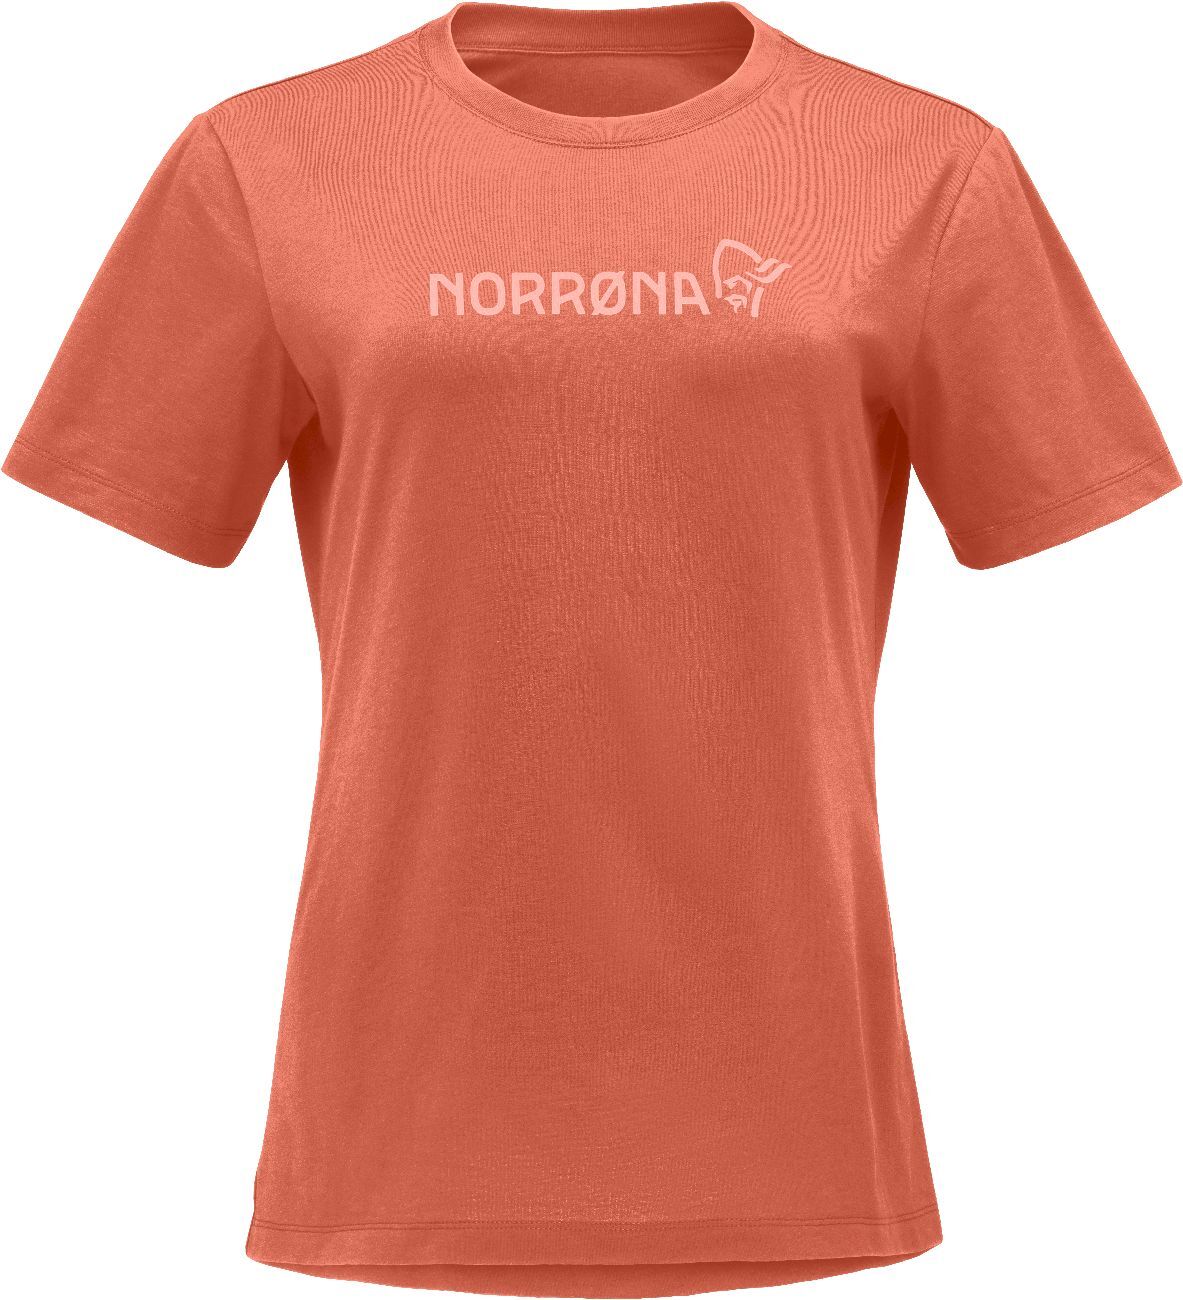 Norrona /29 Cotton Norrona Viking - T-Shirt - Damen